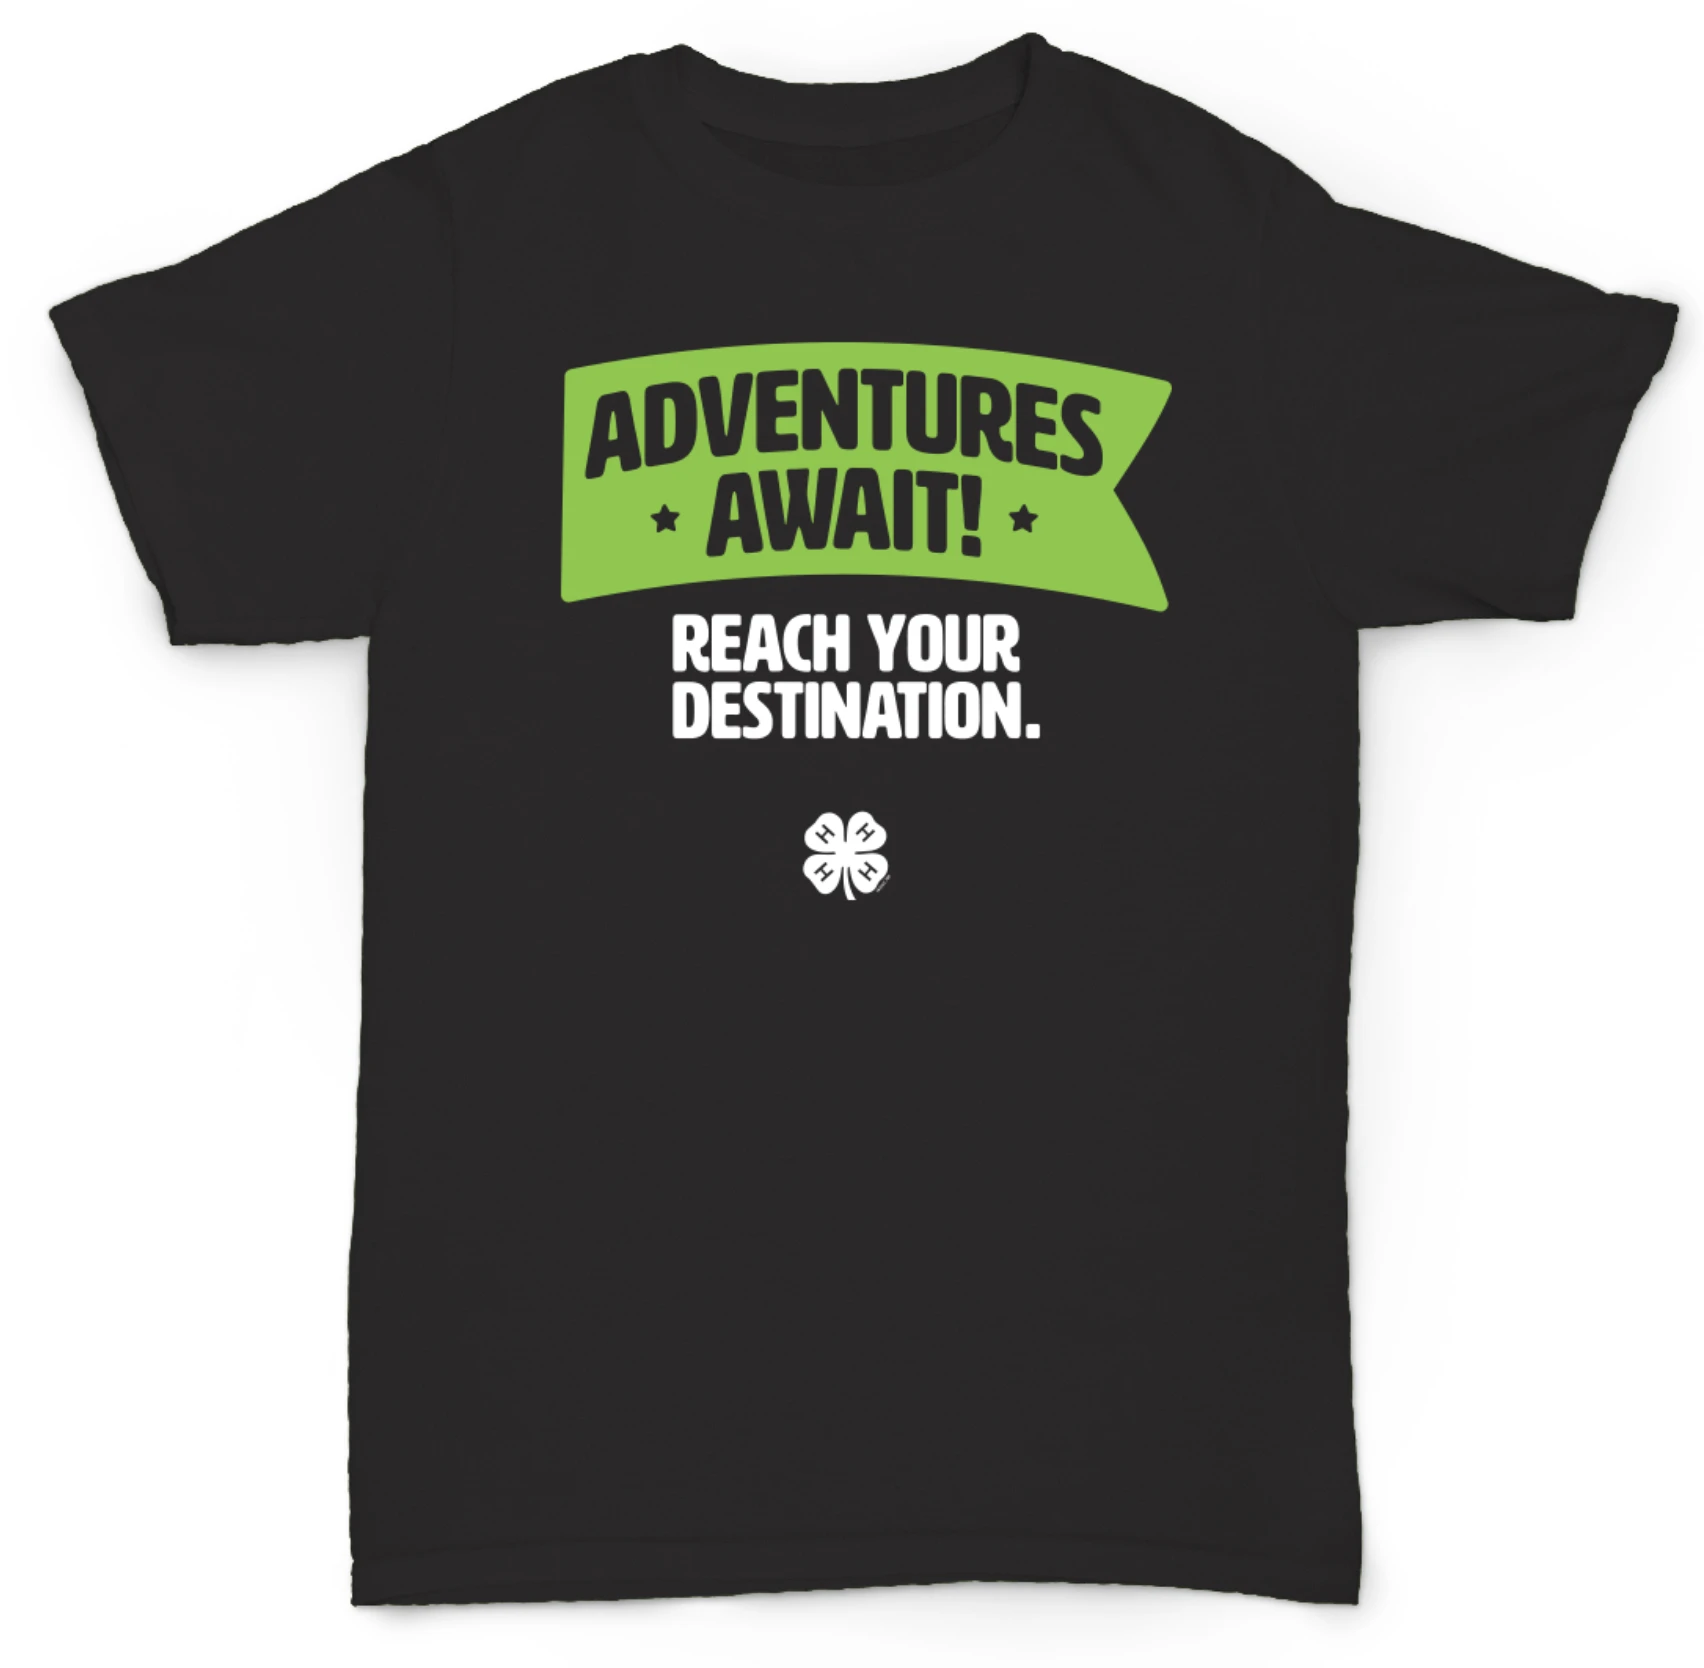 Adventures await return your destruction t-shirt.